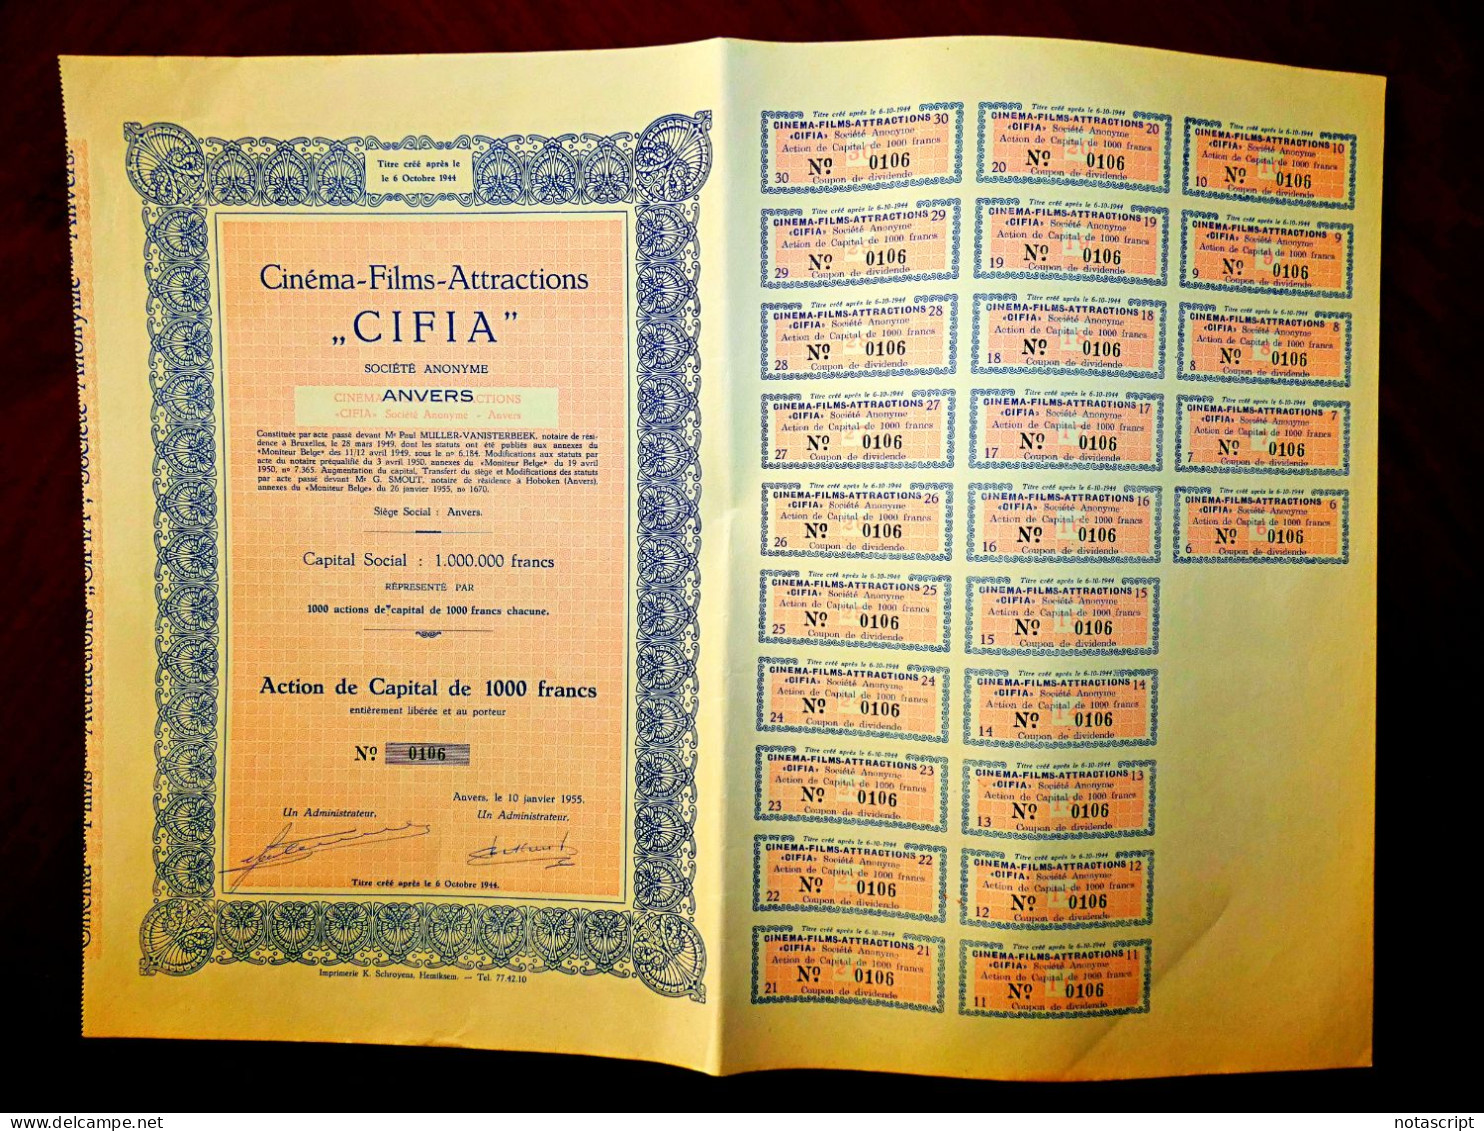 Cinéma Films Attractions CIFIA, Anvers 1955 Belgium  Sharecertificate - Cinéma & Theatre